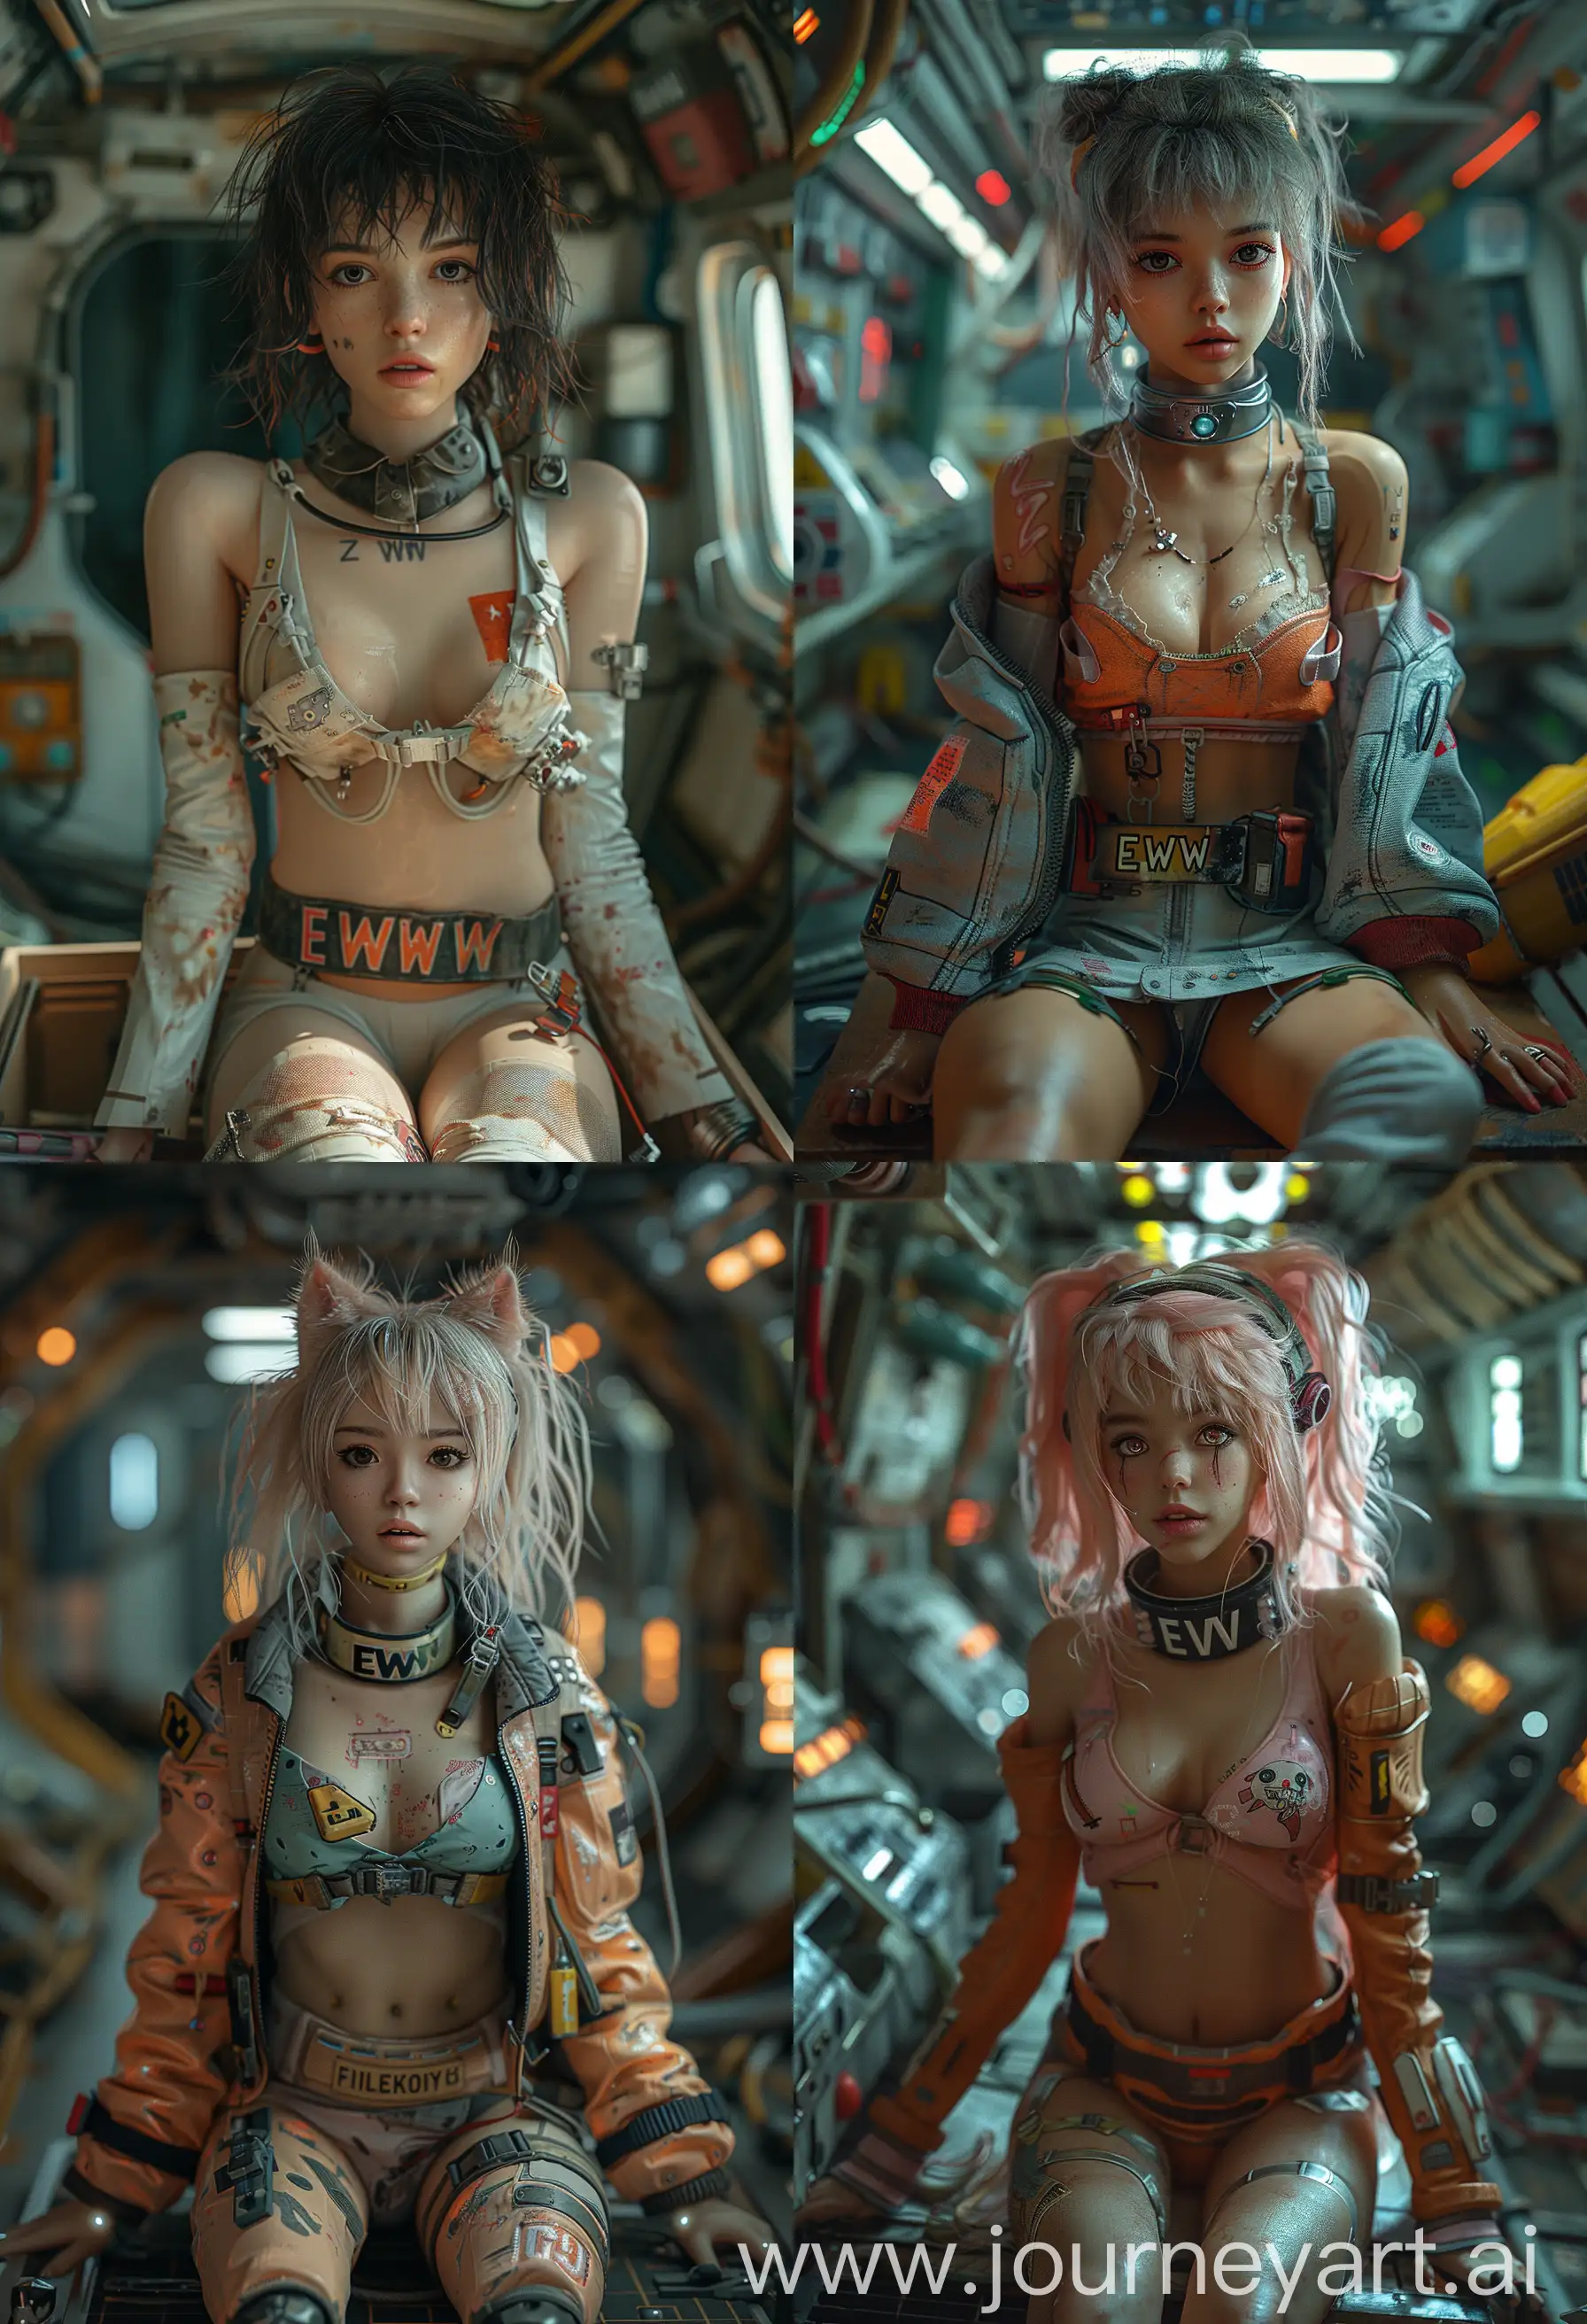 Dreamy-Cyberpunk-Anime-Character-Wearing-EWW-Collar-in-Surreal-Spaceship-Scene